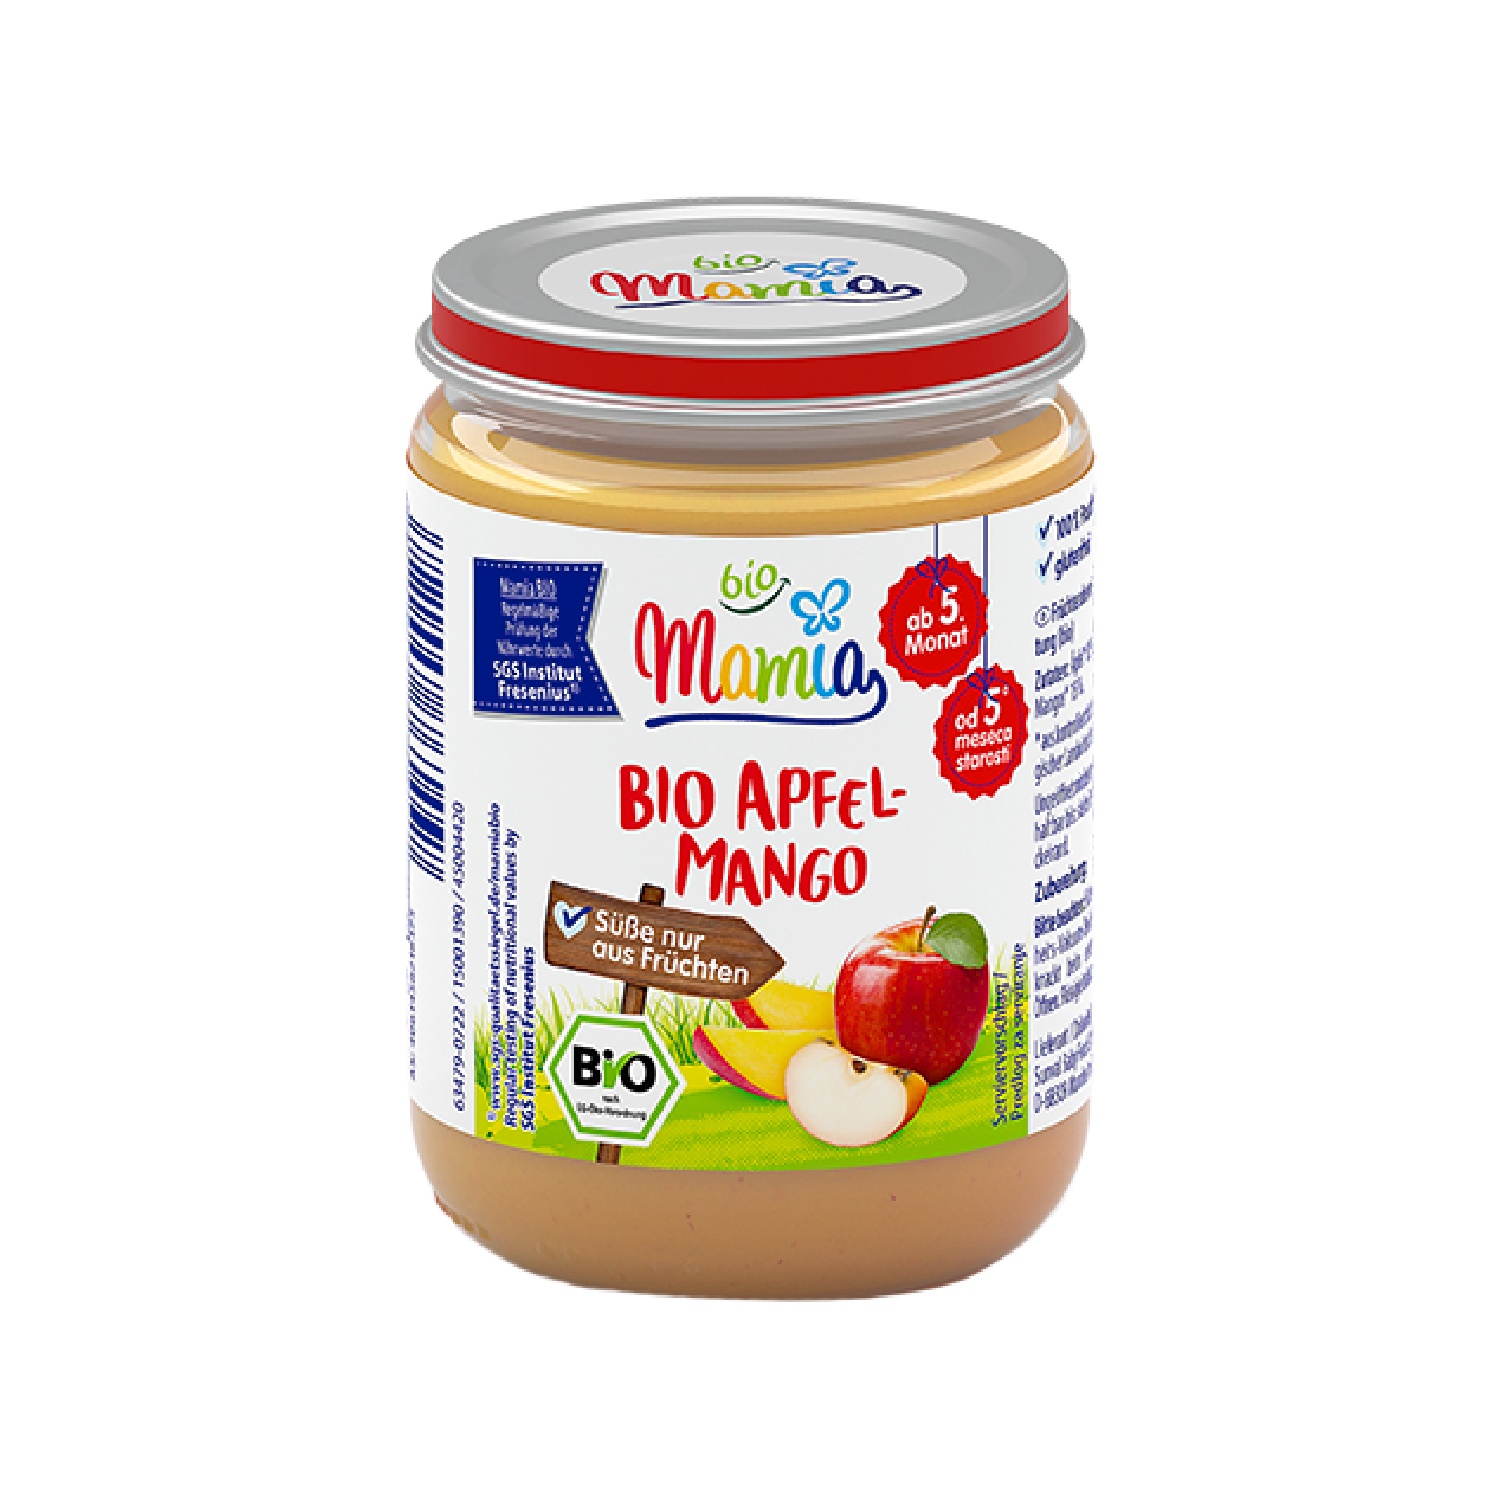 MAMIA BIO Bio-Apfel-Mango 190 g